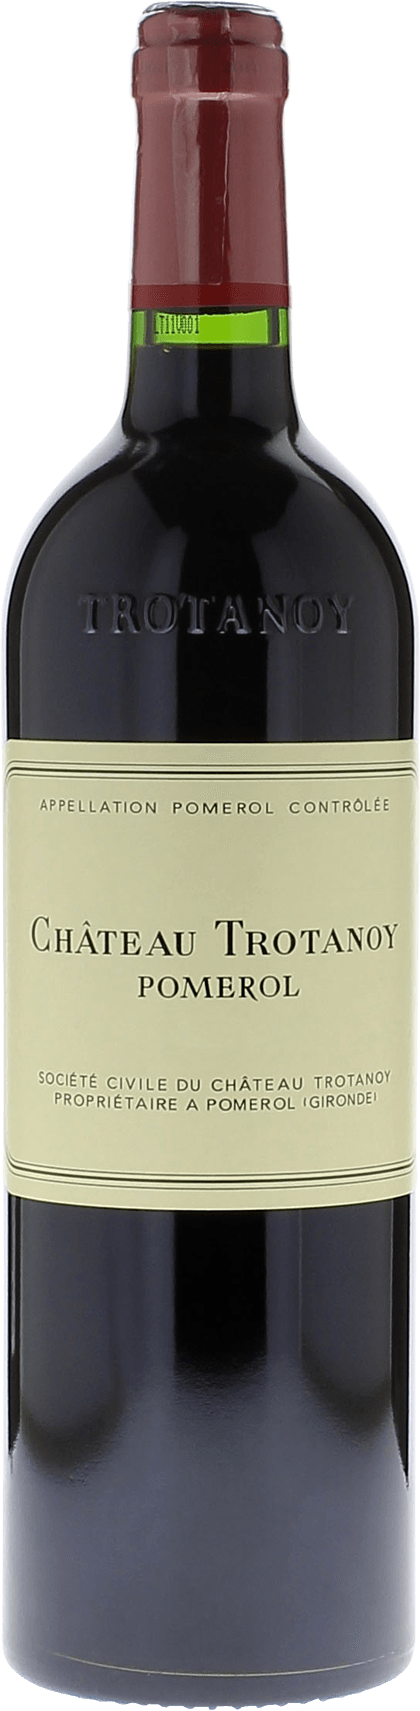 Trotanoy 1990  Pomerol, Bordeaux rouge